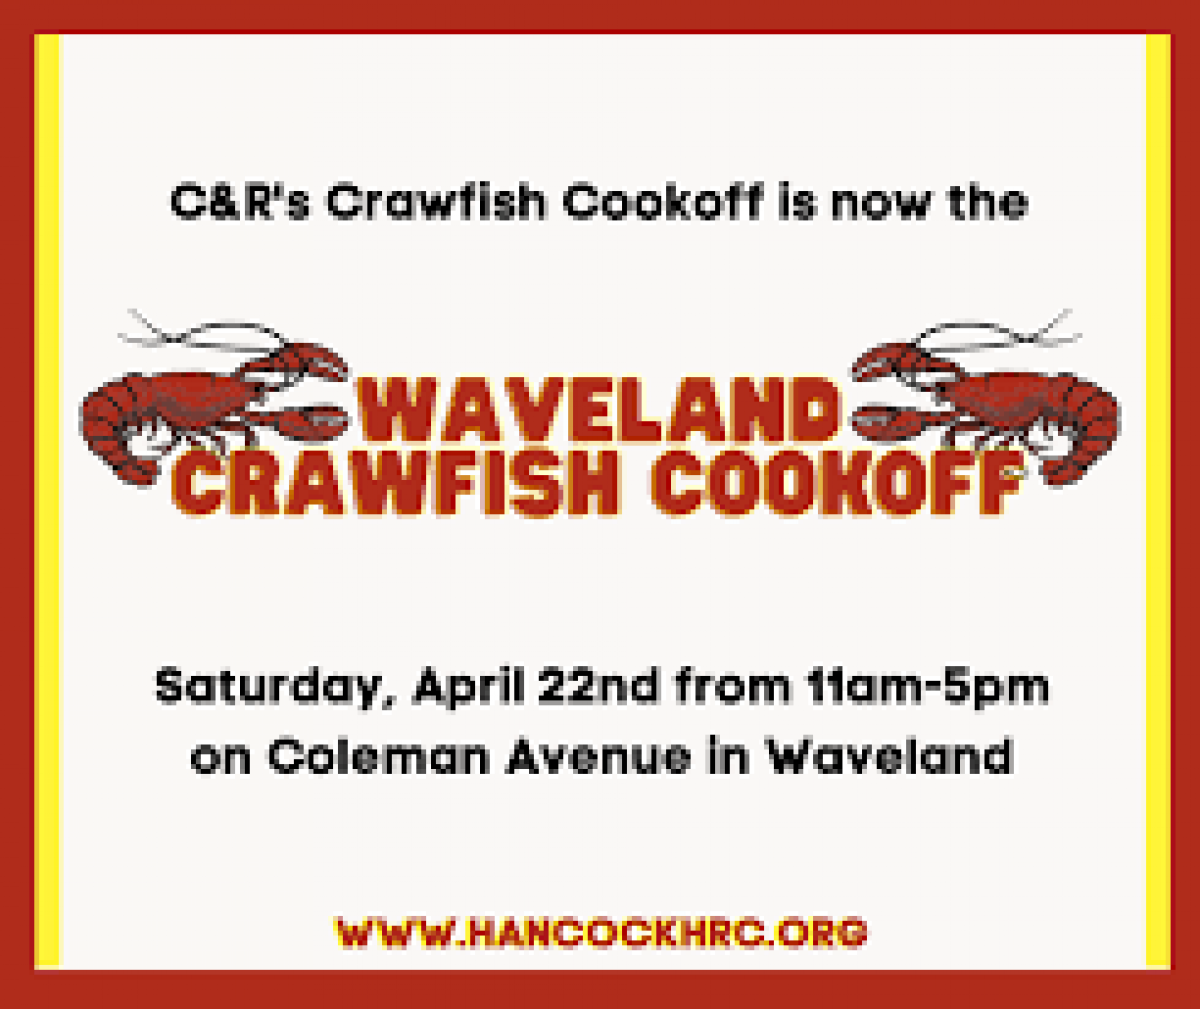 Waveland Crawfish Cookoff